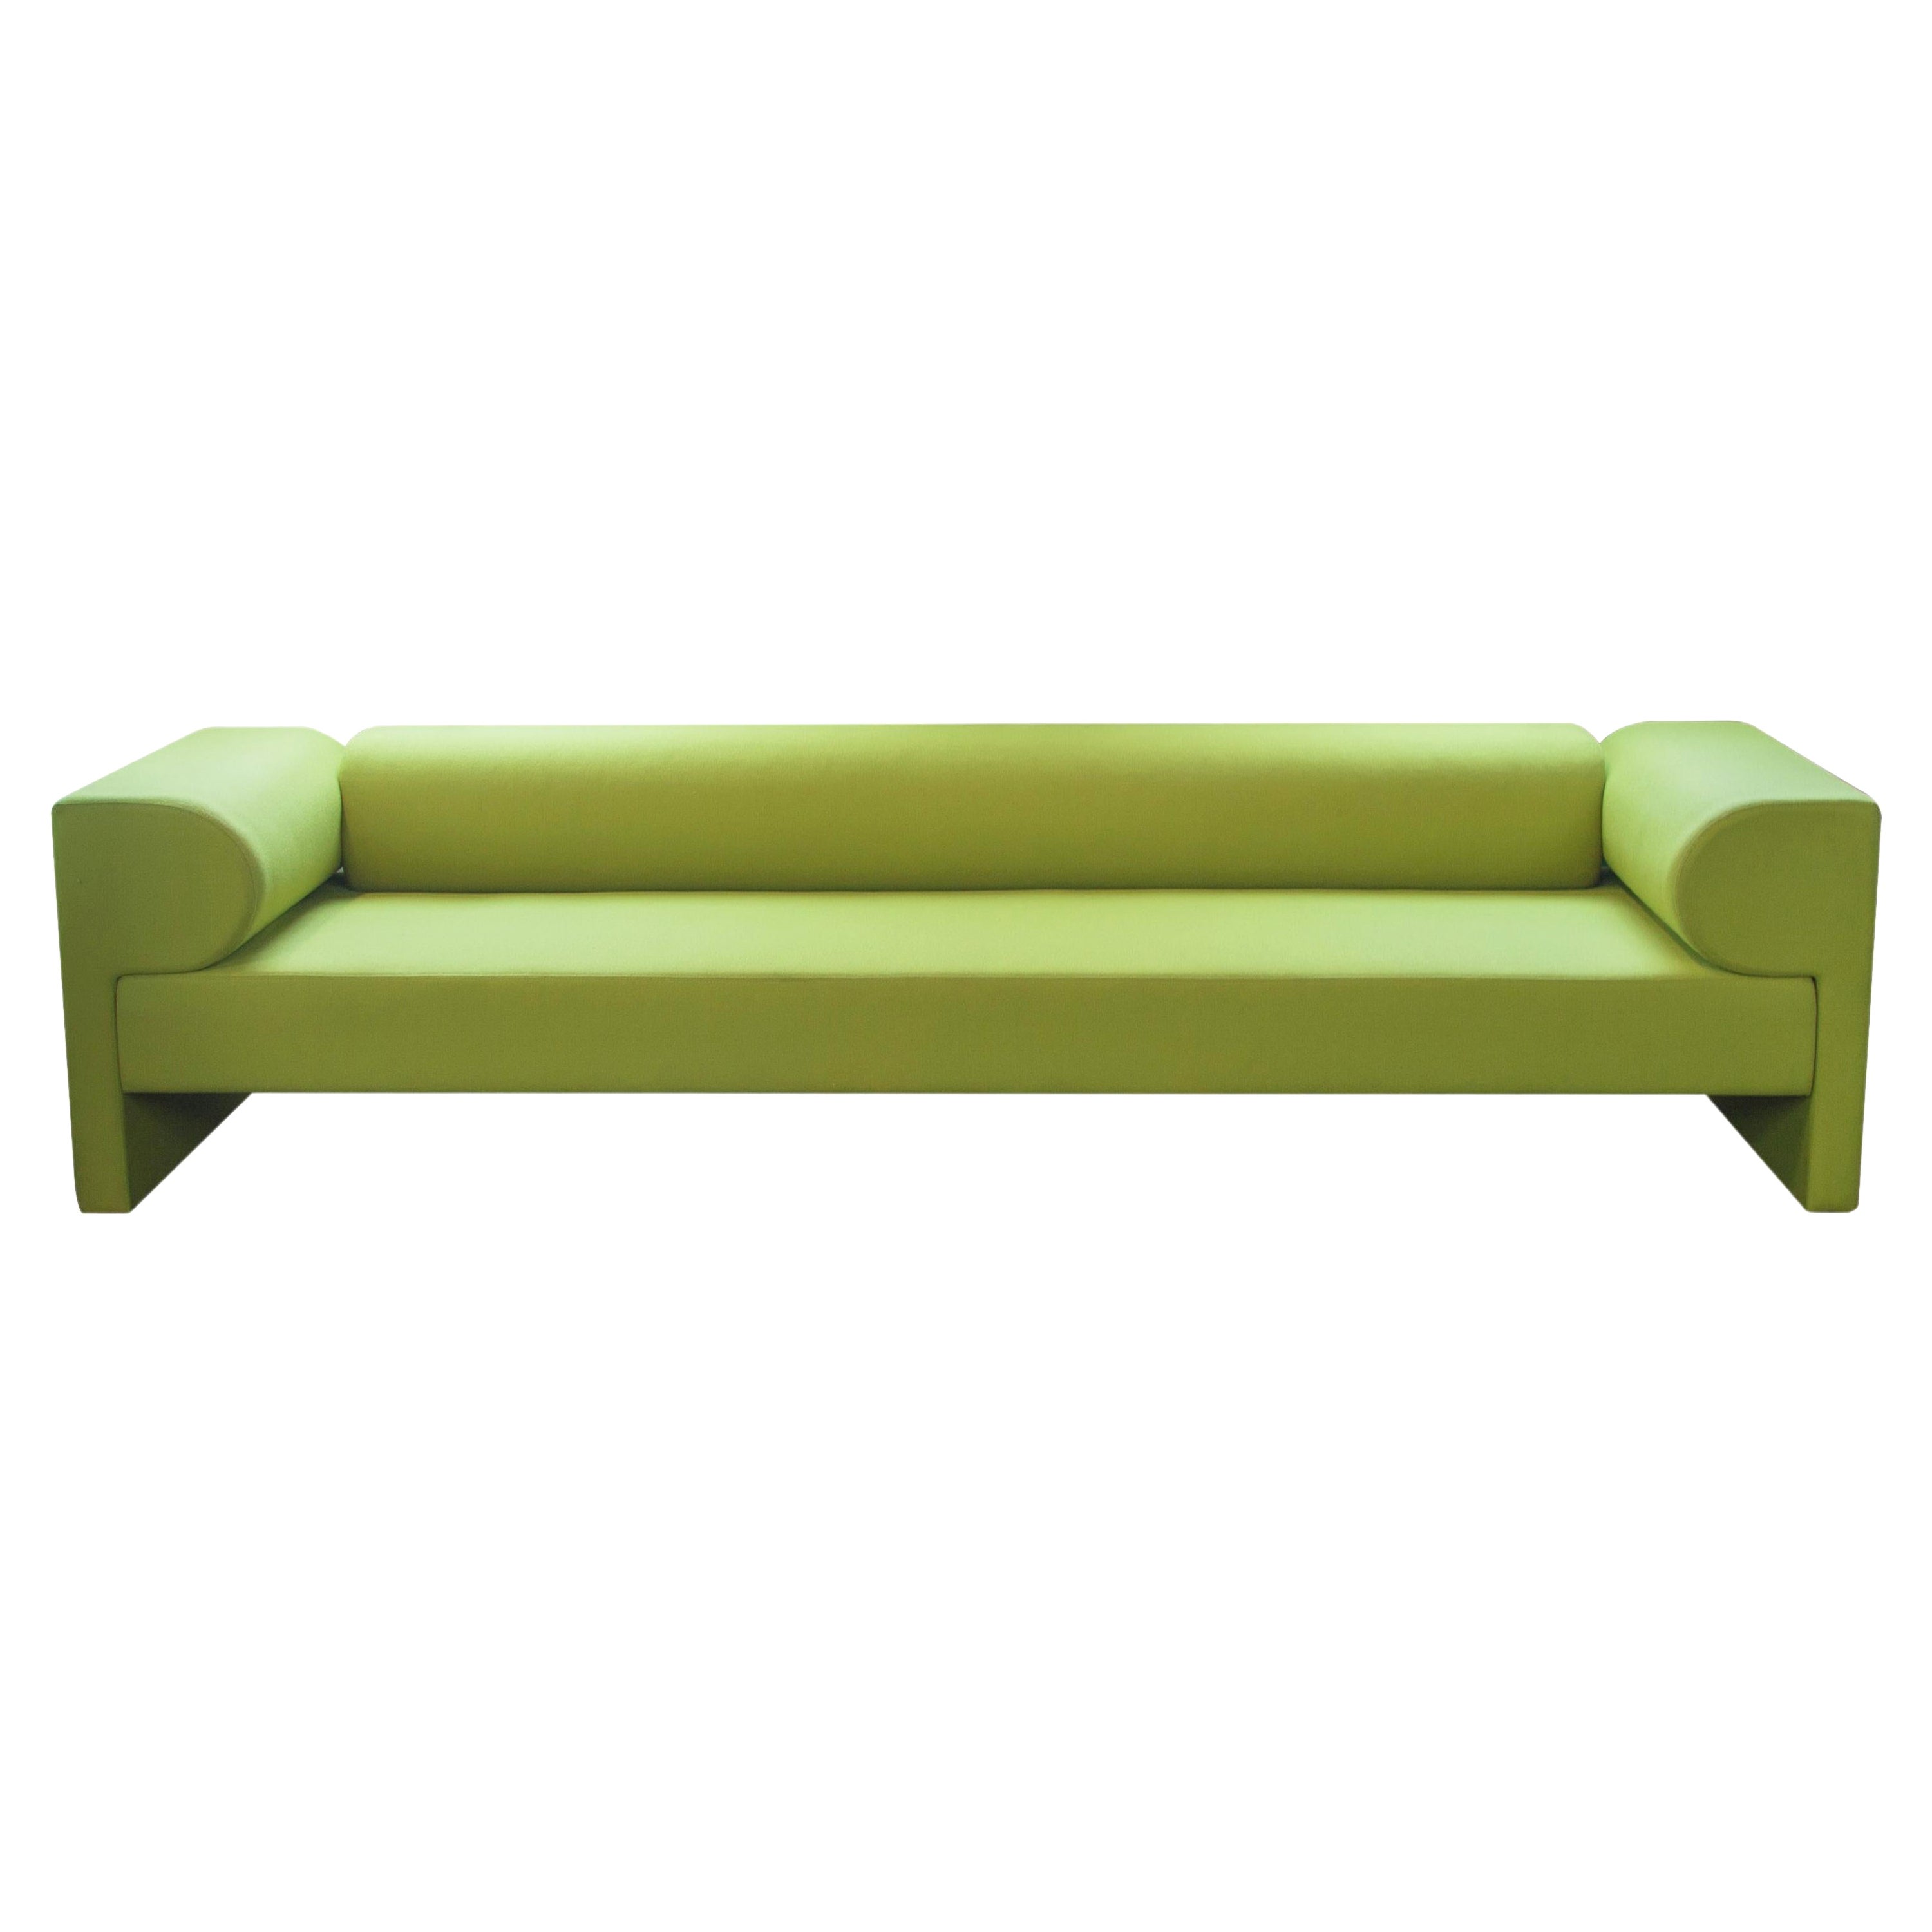 Grünes Say-Sofa von Gentner Design